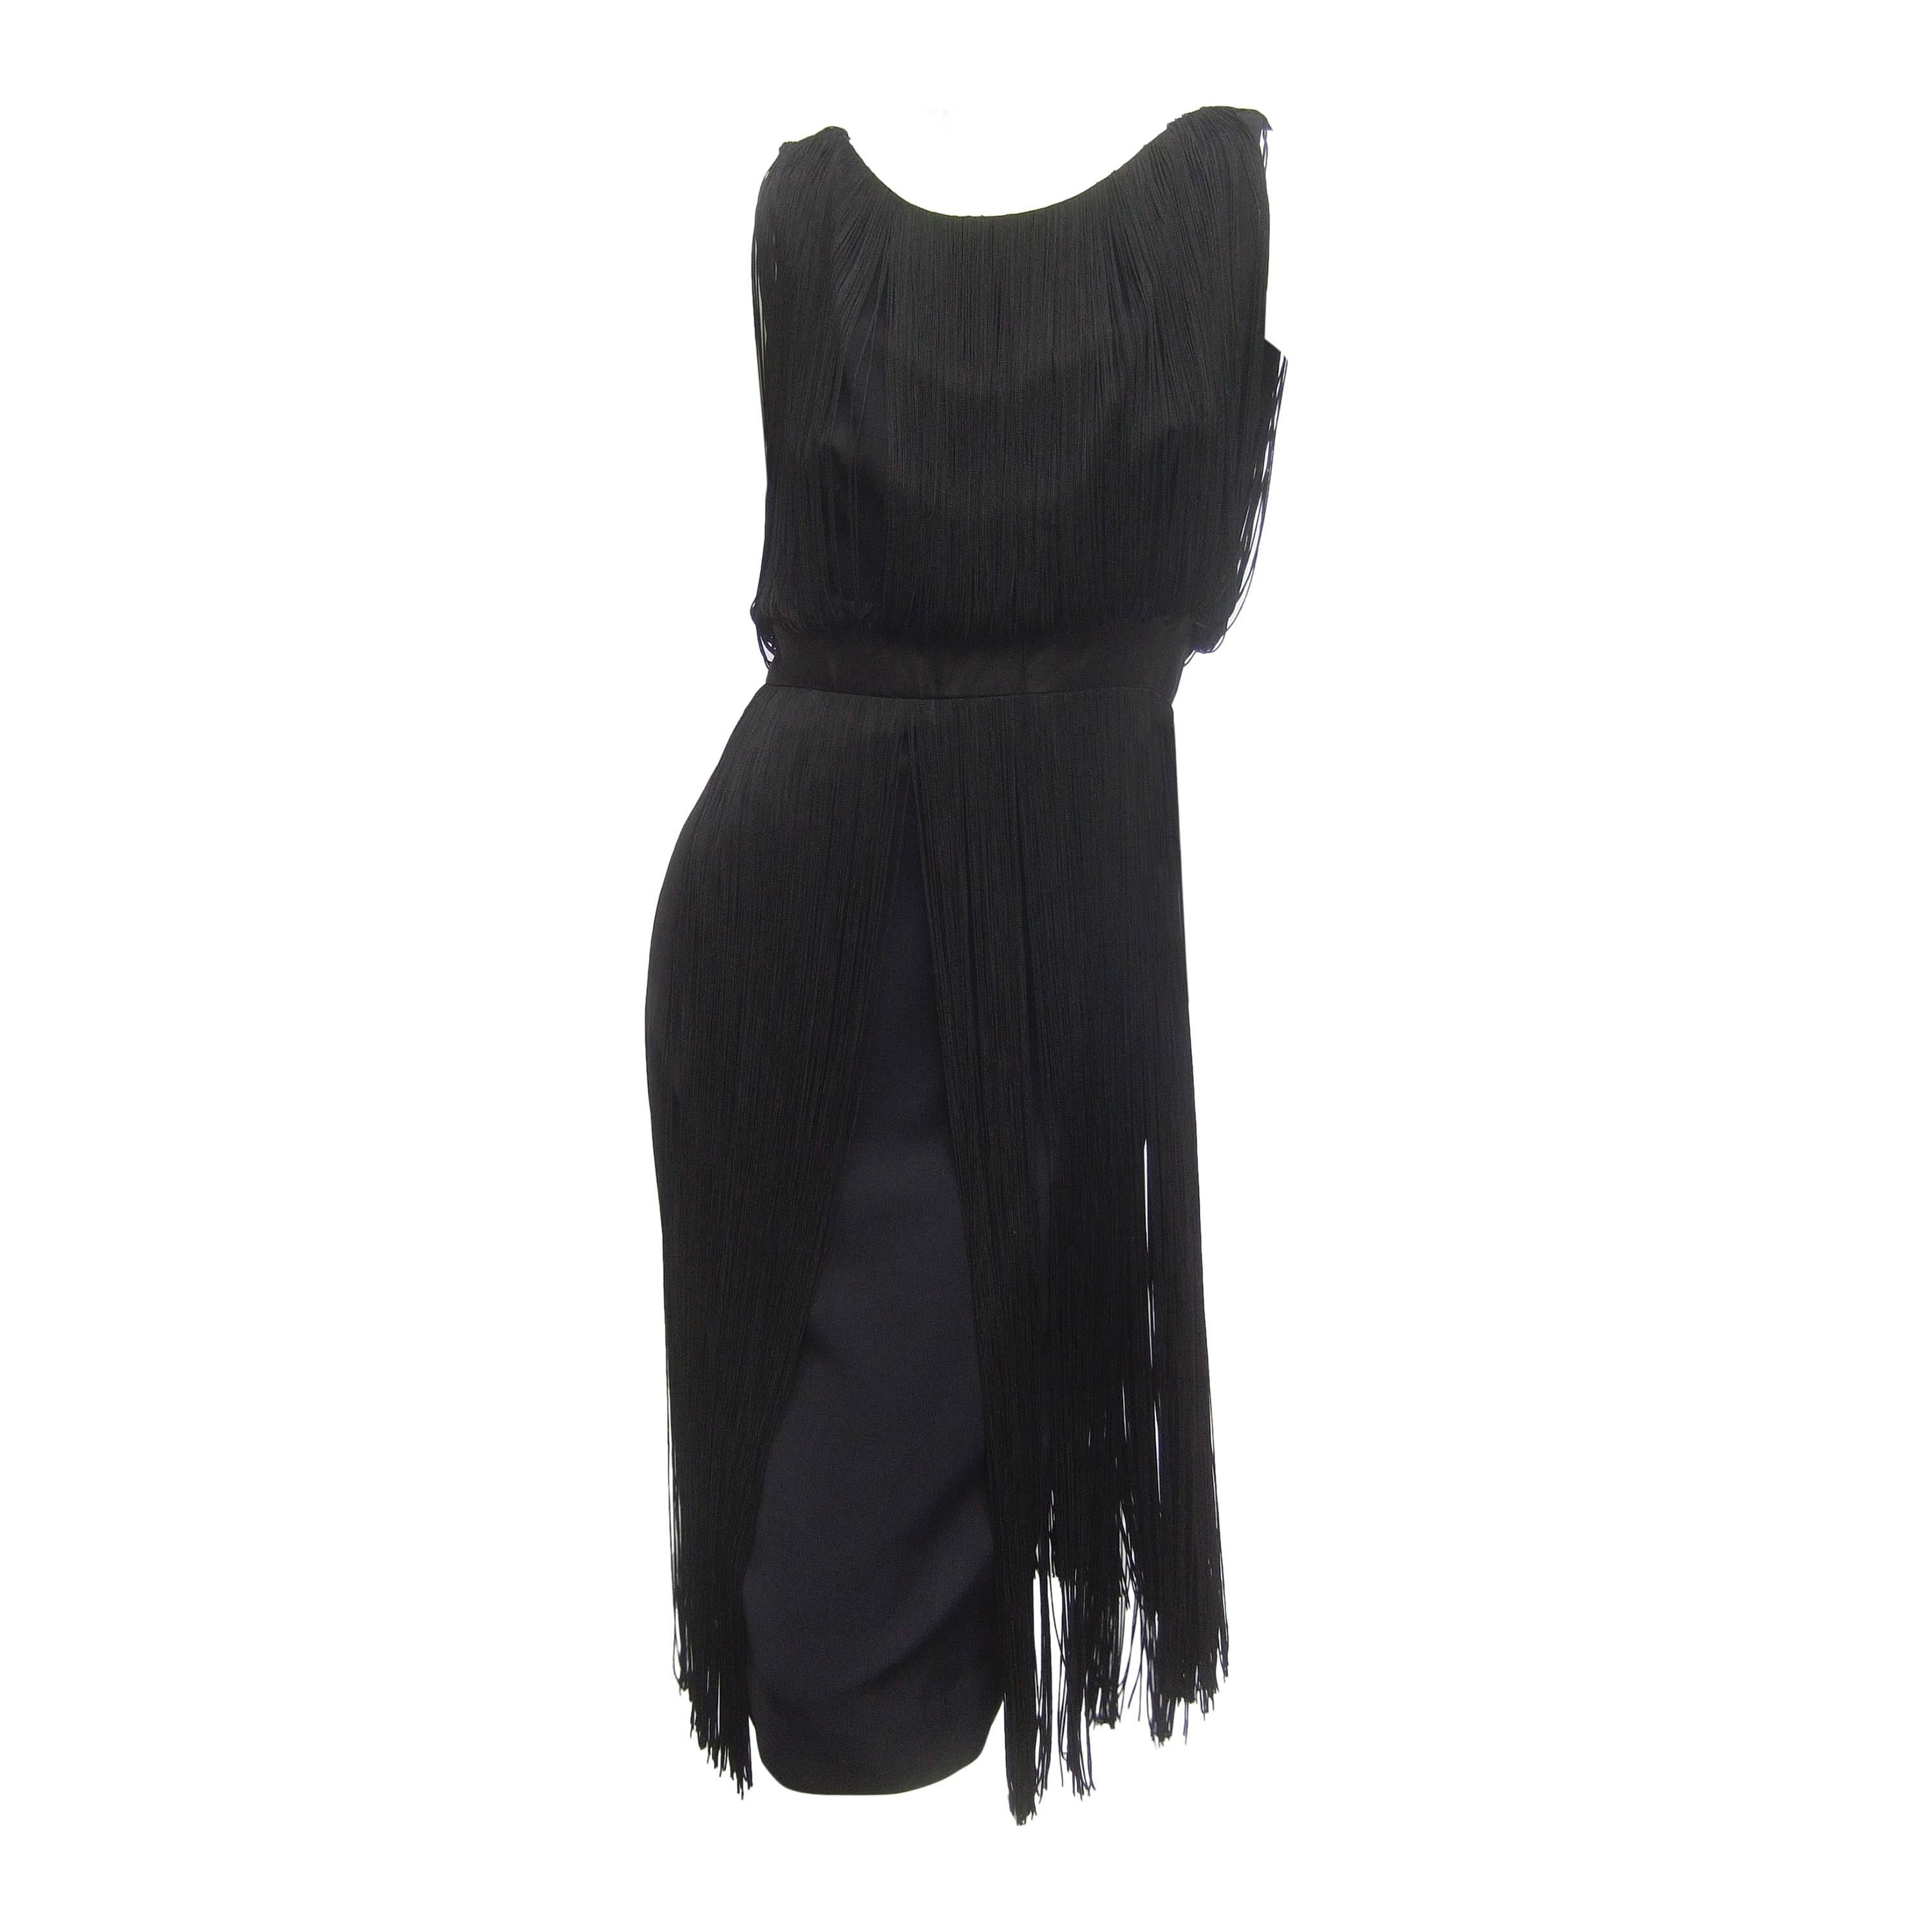 1960s Black Fringe Tassel Cocktail Dress